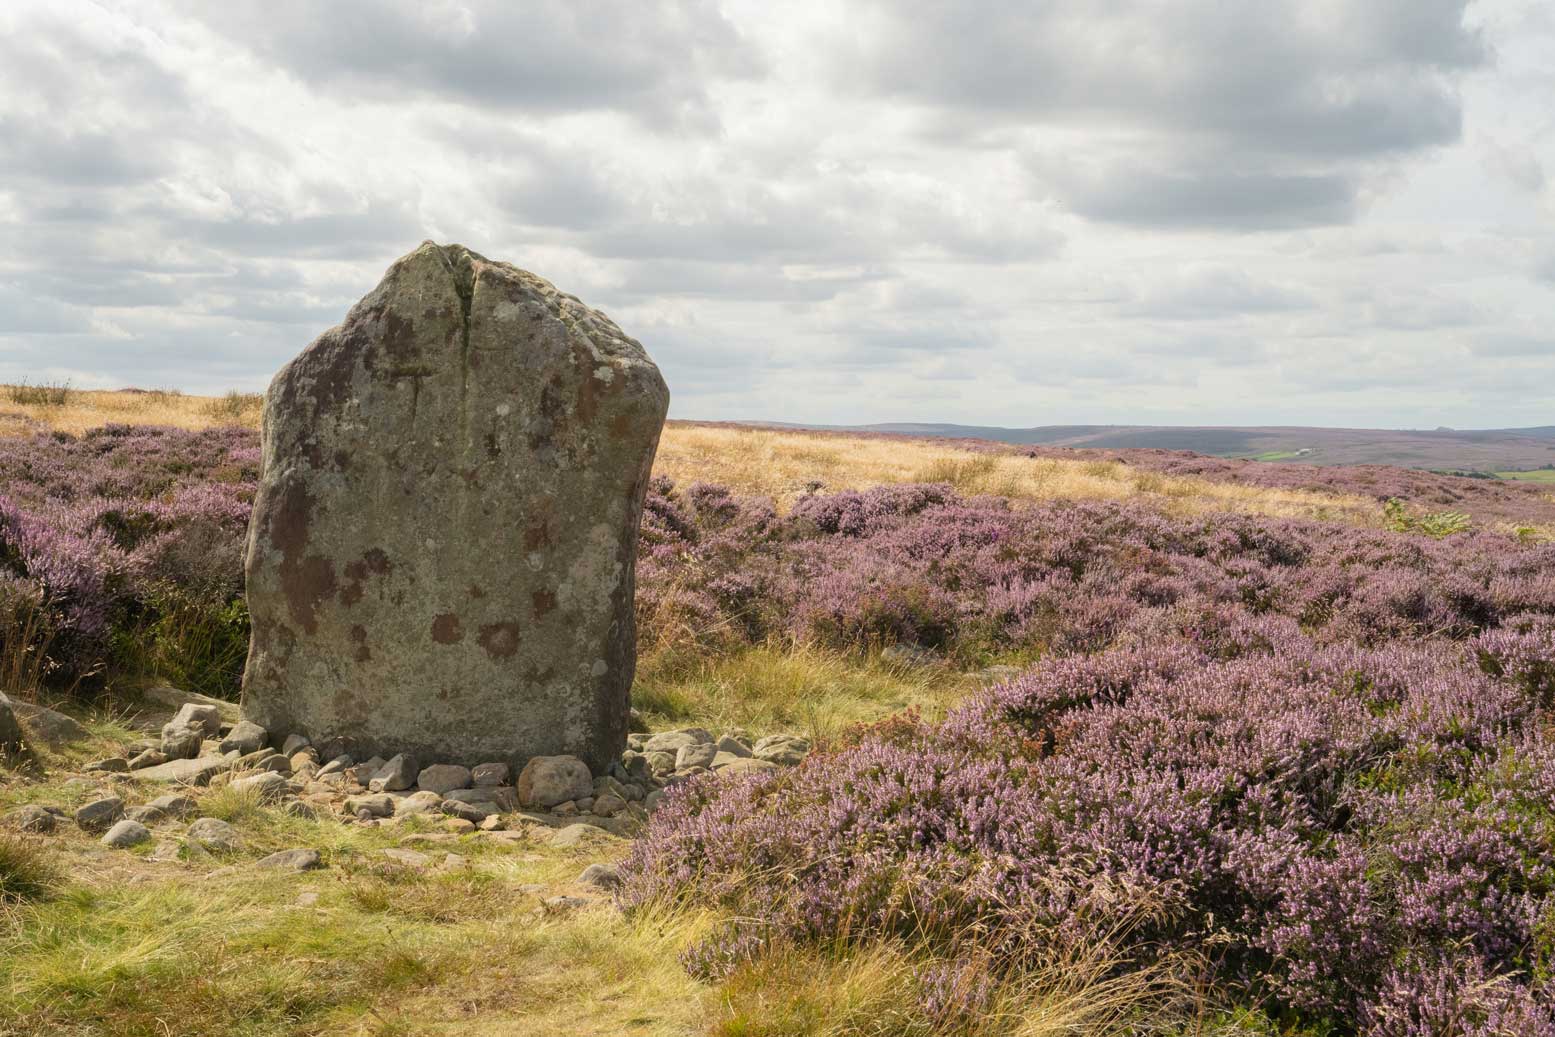 Standing stone among moorland. Credit James Hines.